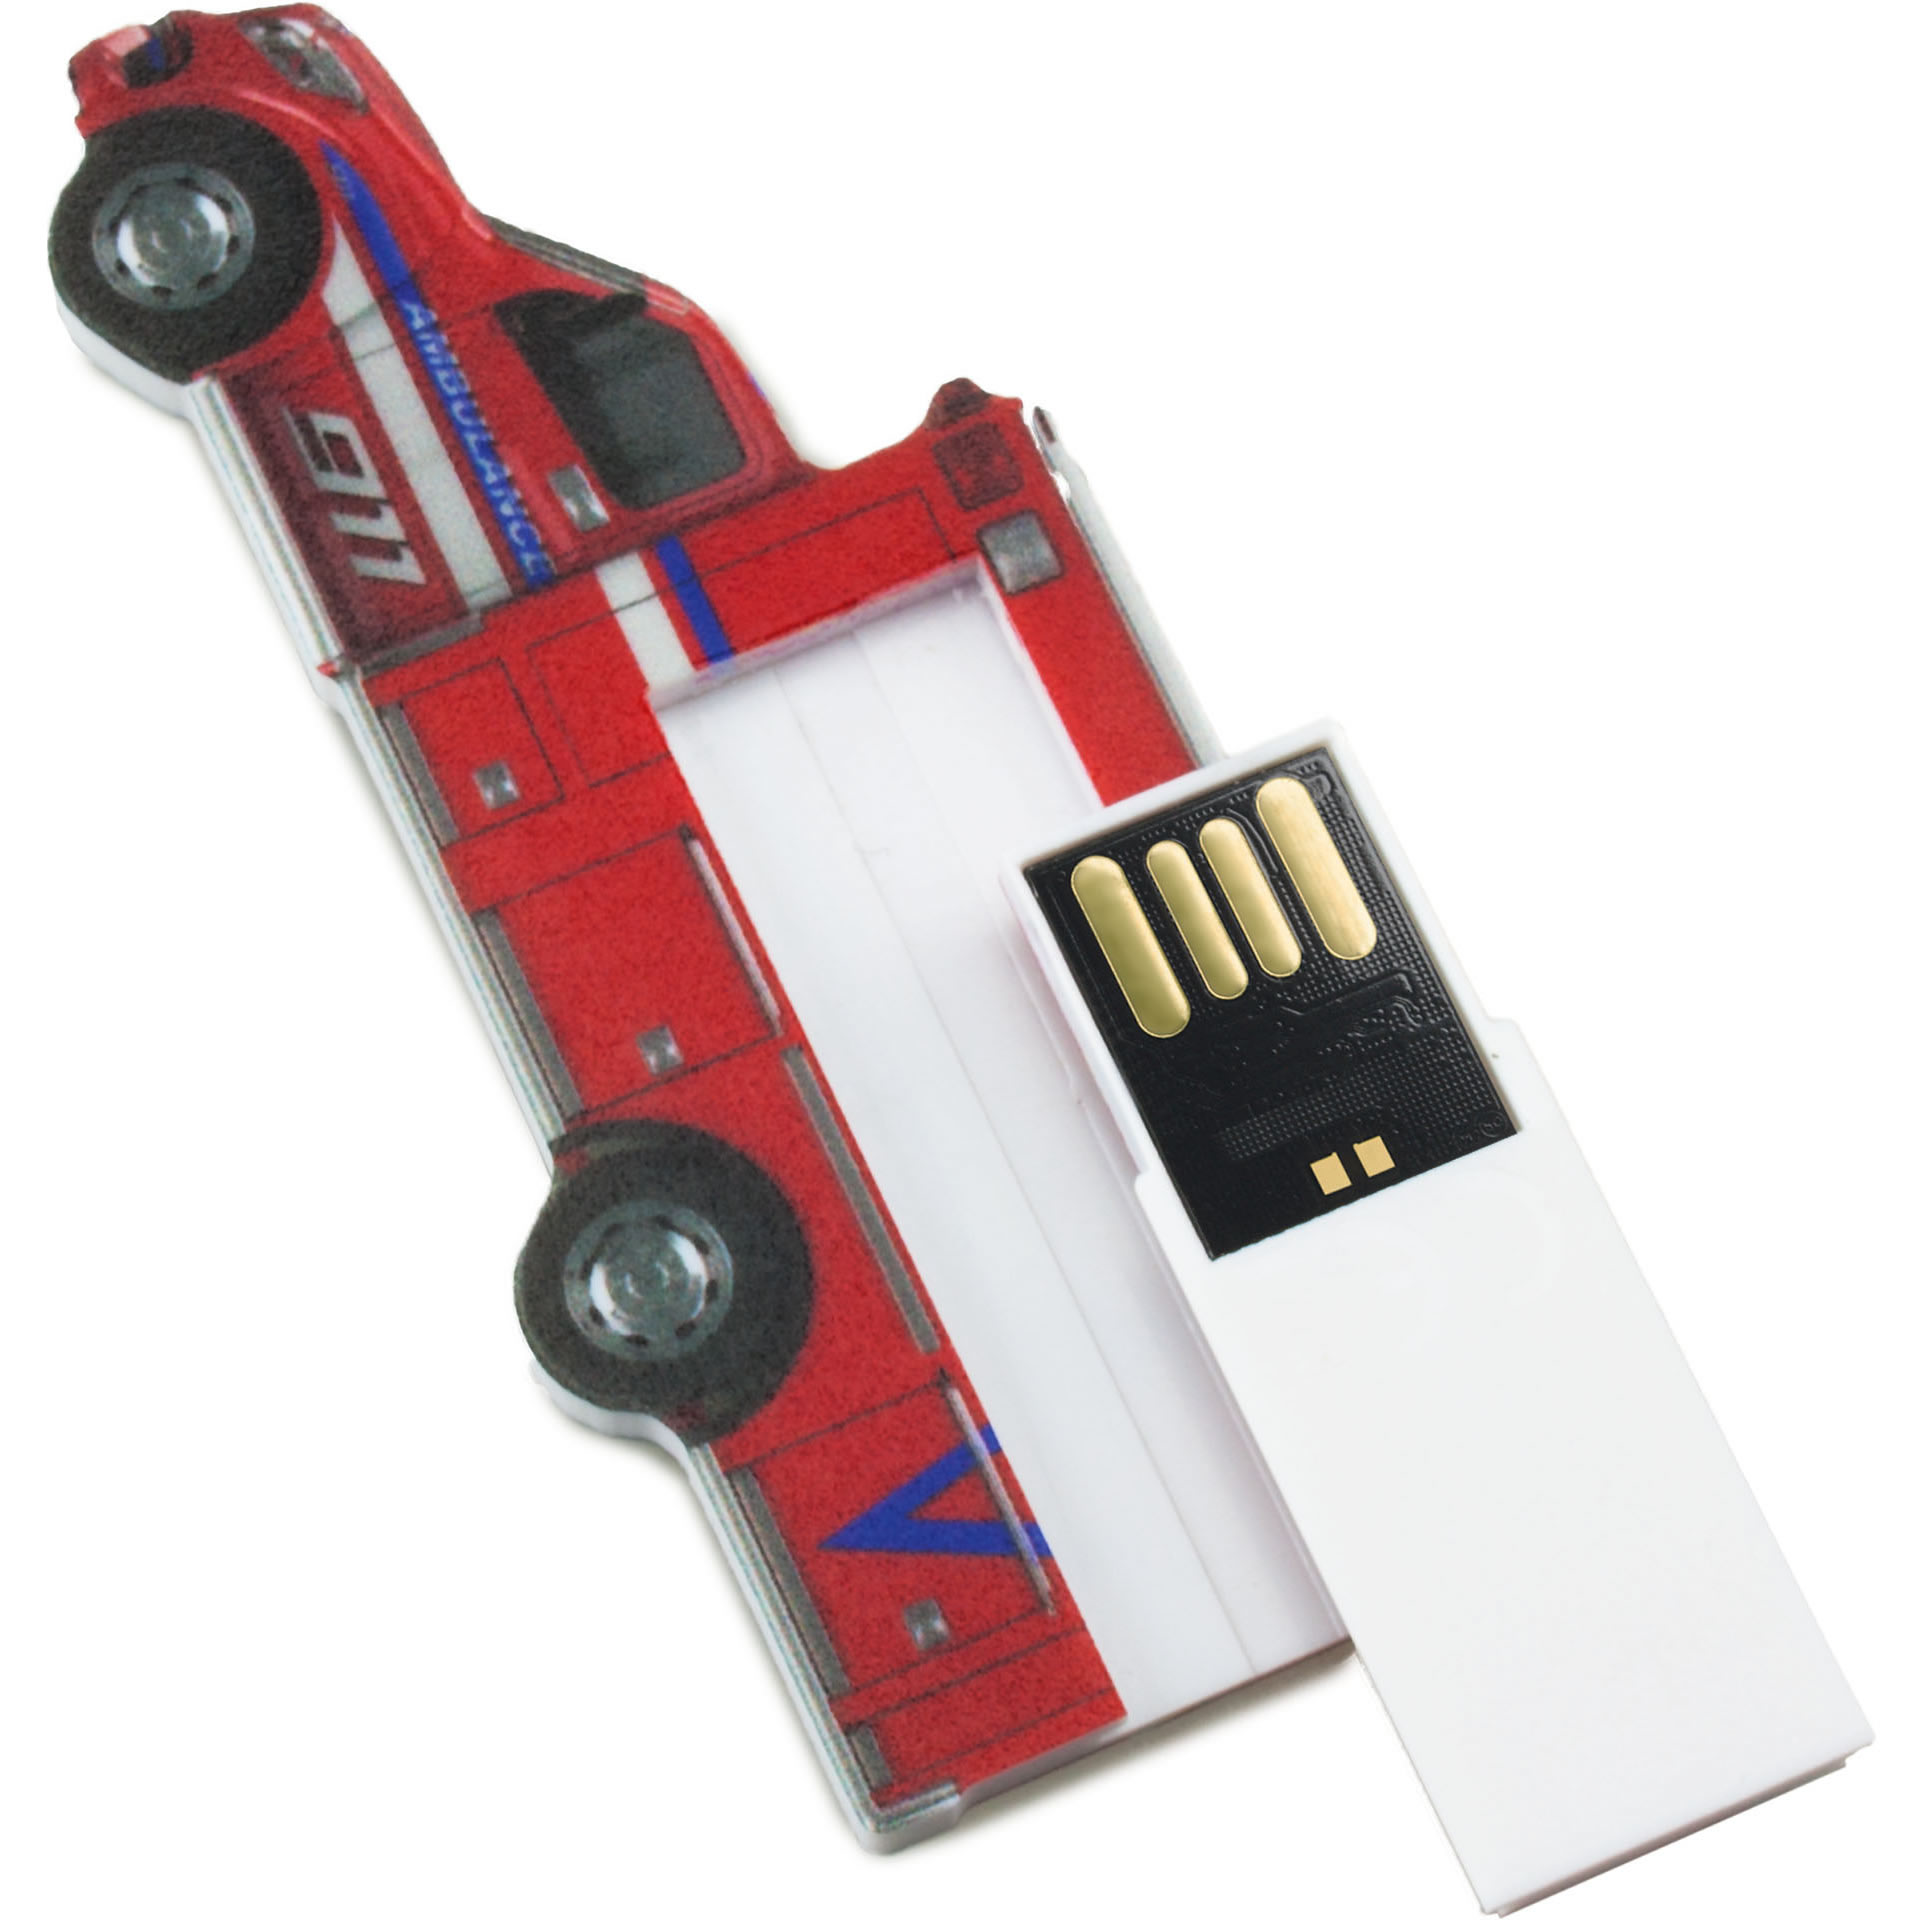 USB Shape Slide